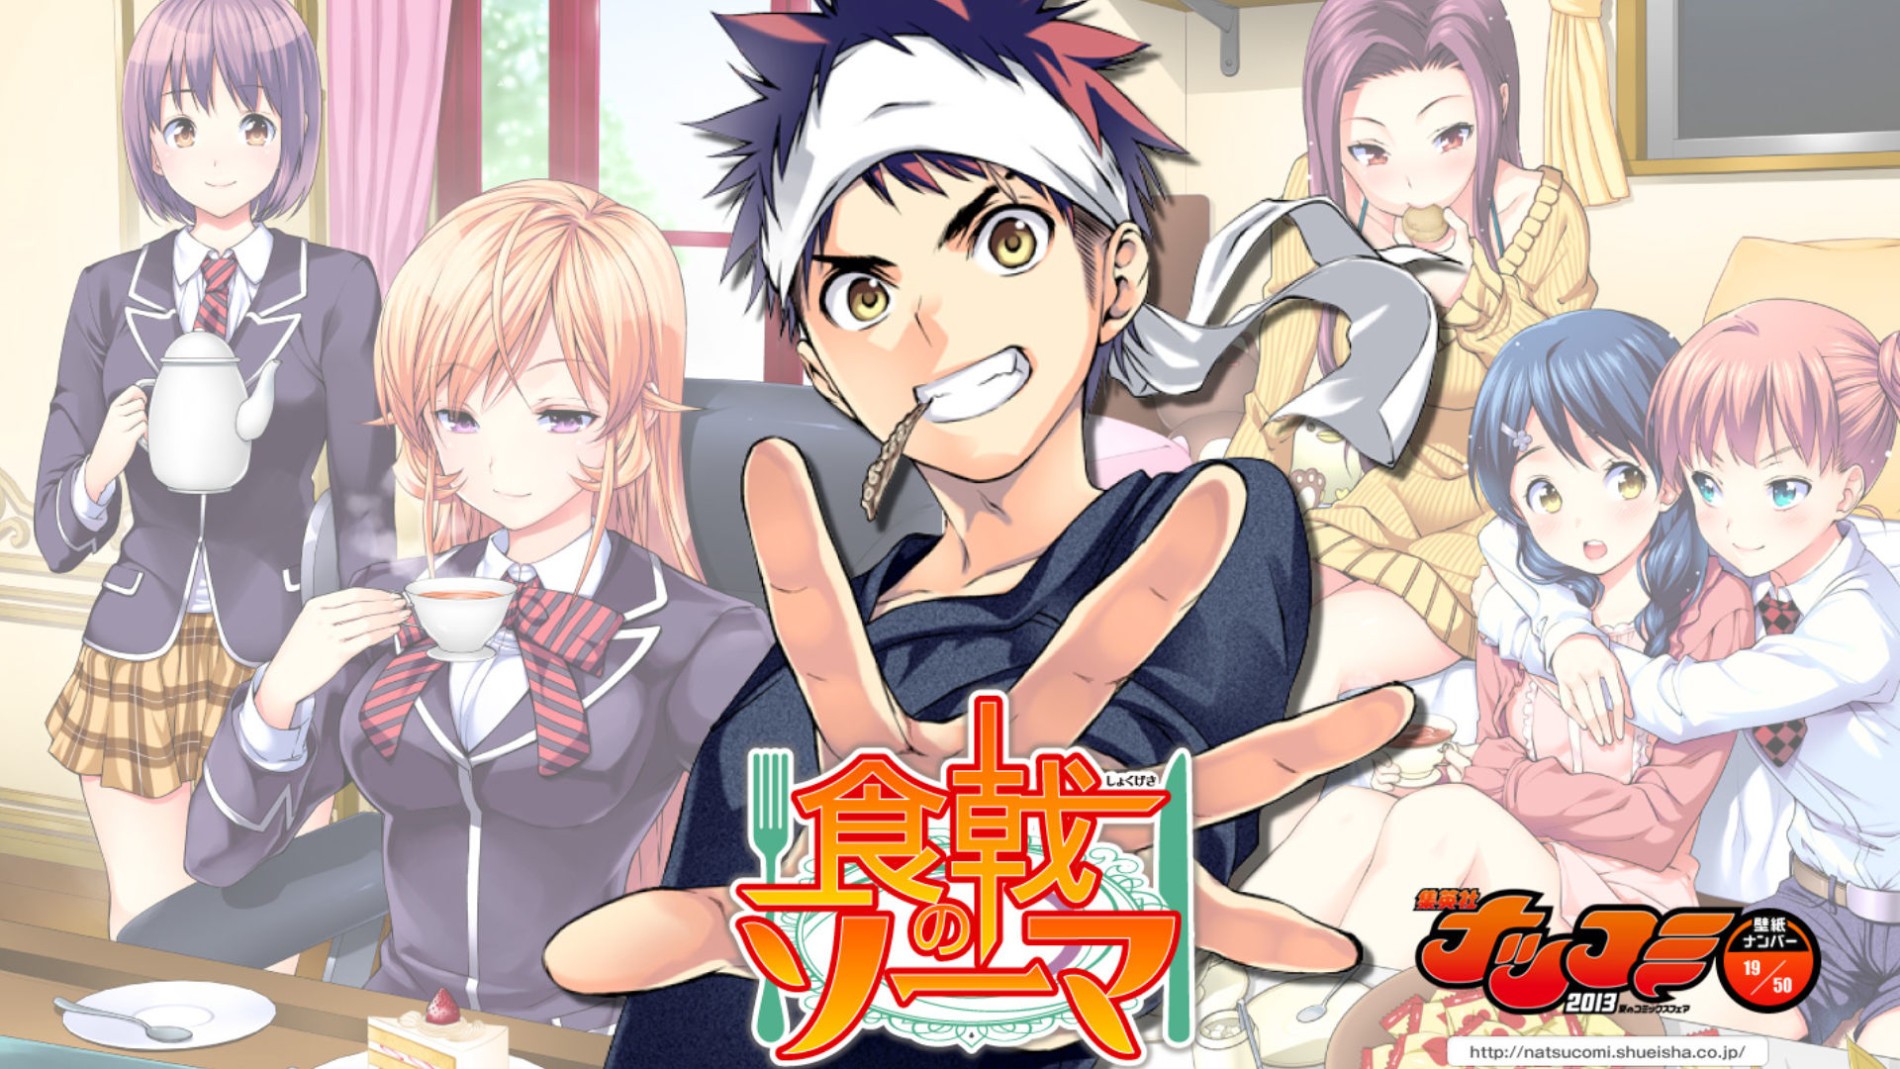 Shokugeki No Souma  Anime couples fighting, Food wars, Shokugeki no soma  anime